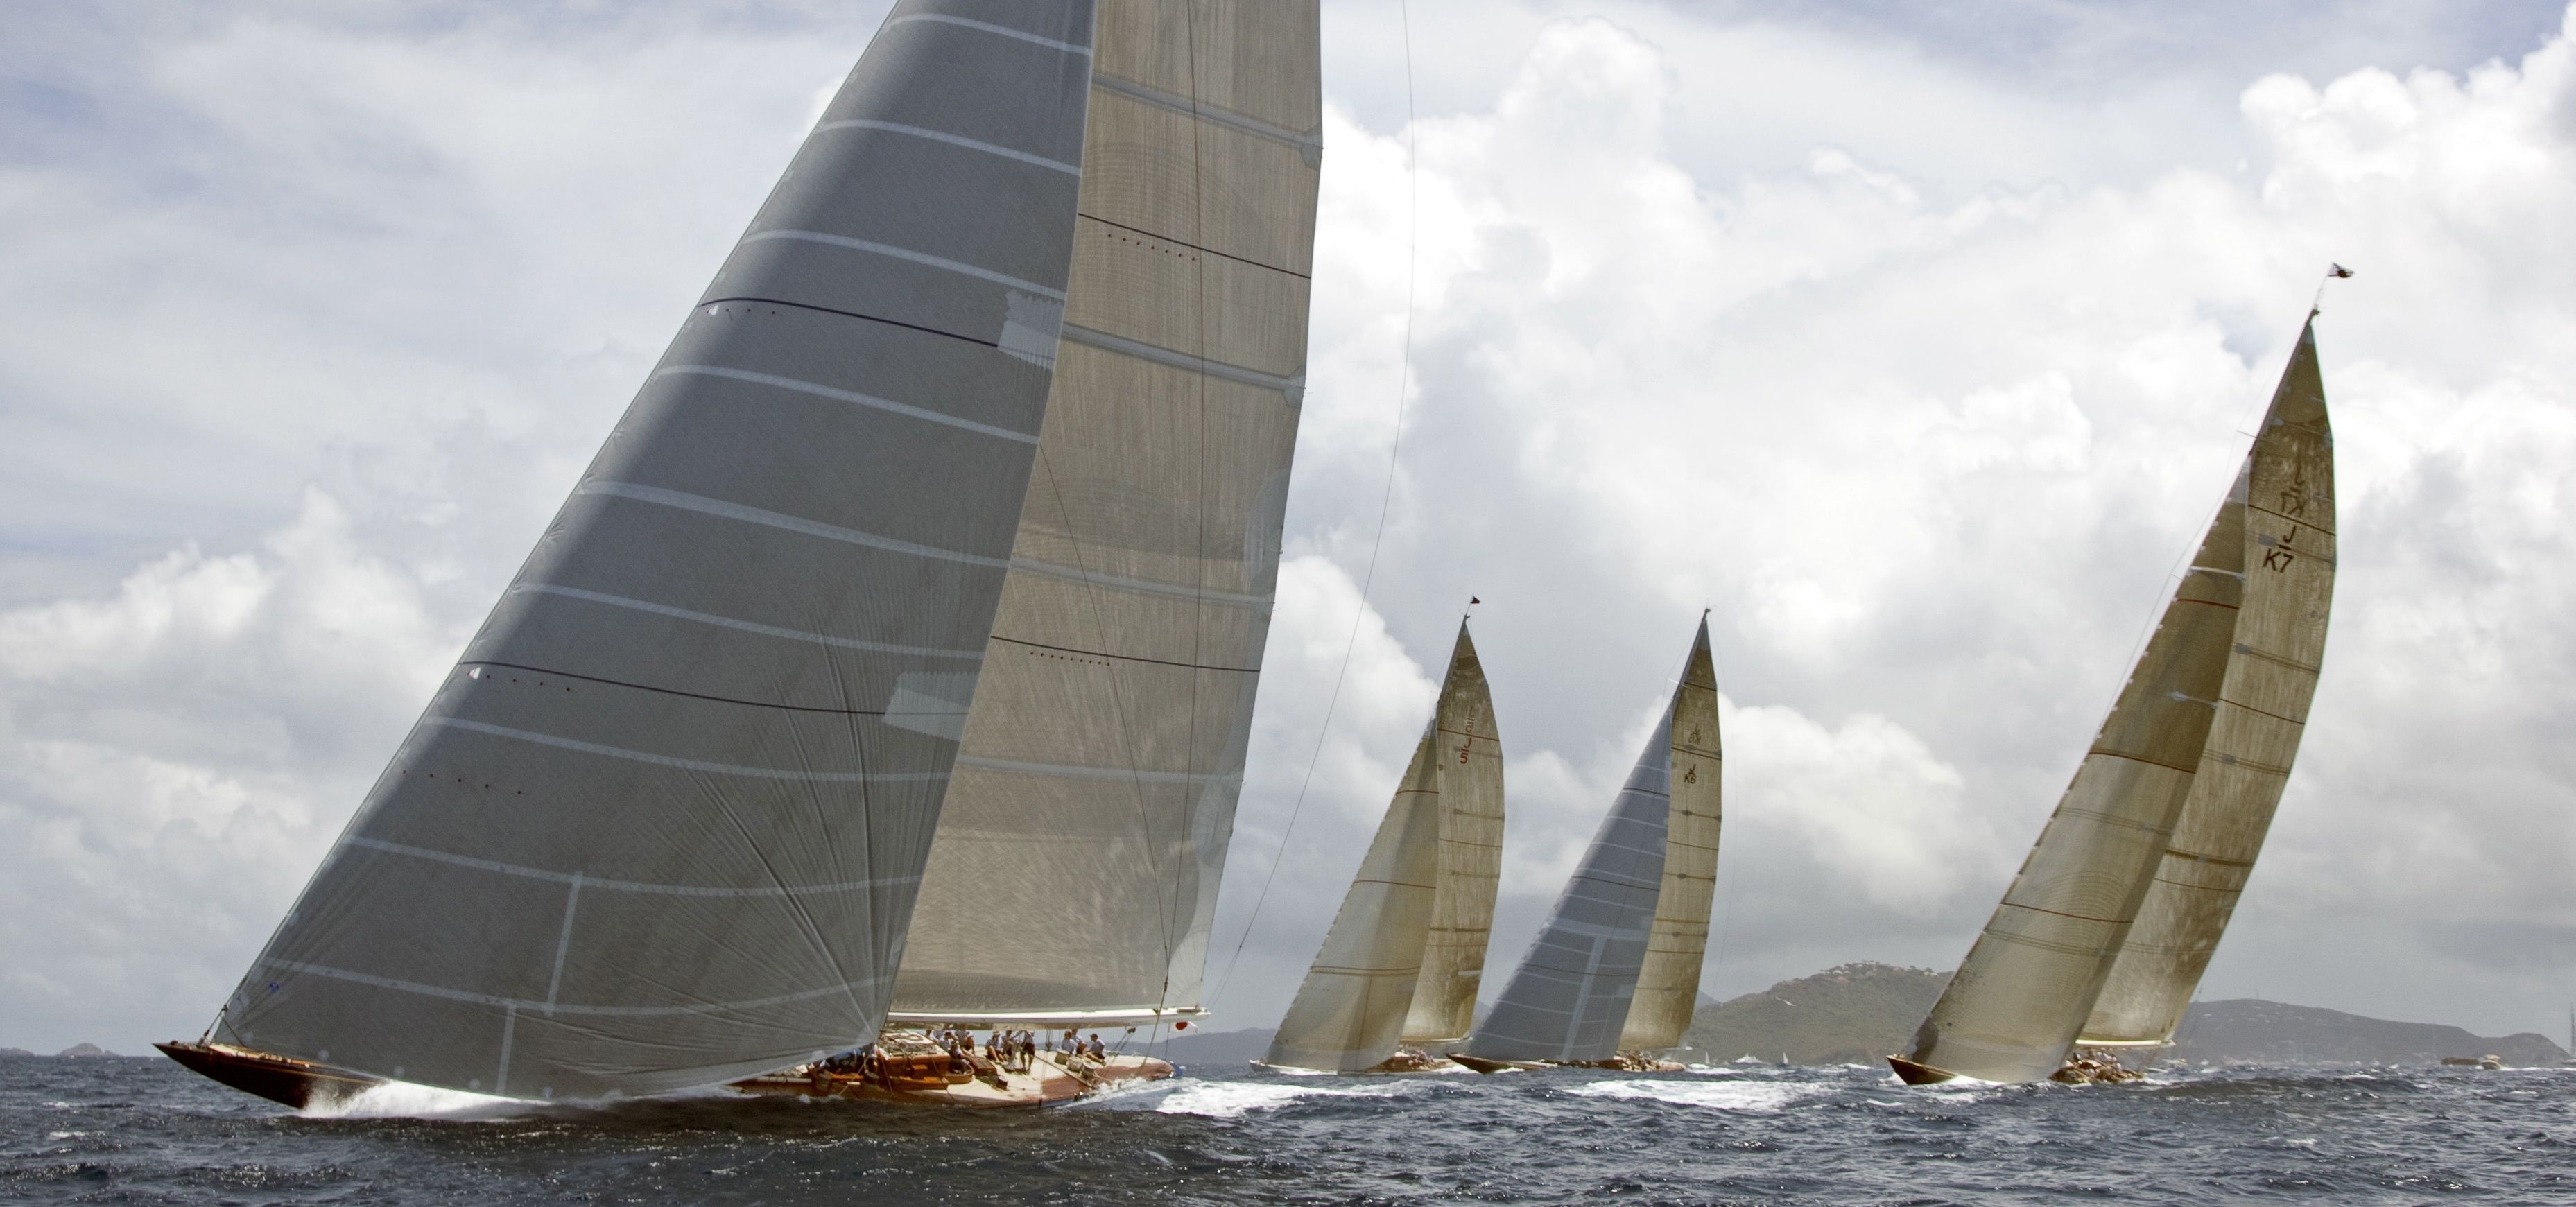 Yacht Racing: J Class Yachts, A sailing race, Contesting on the water, Regatta. 3720x1750 Dual Screen Background.